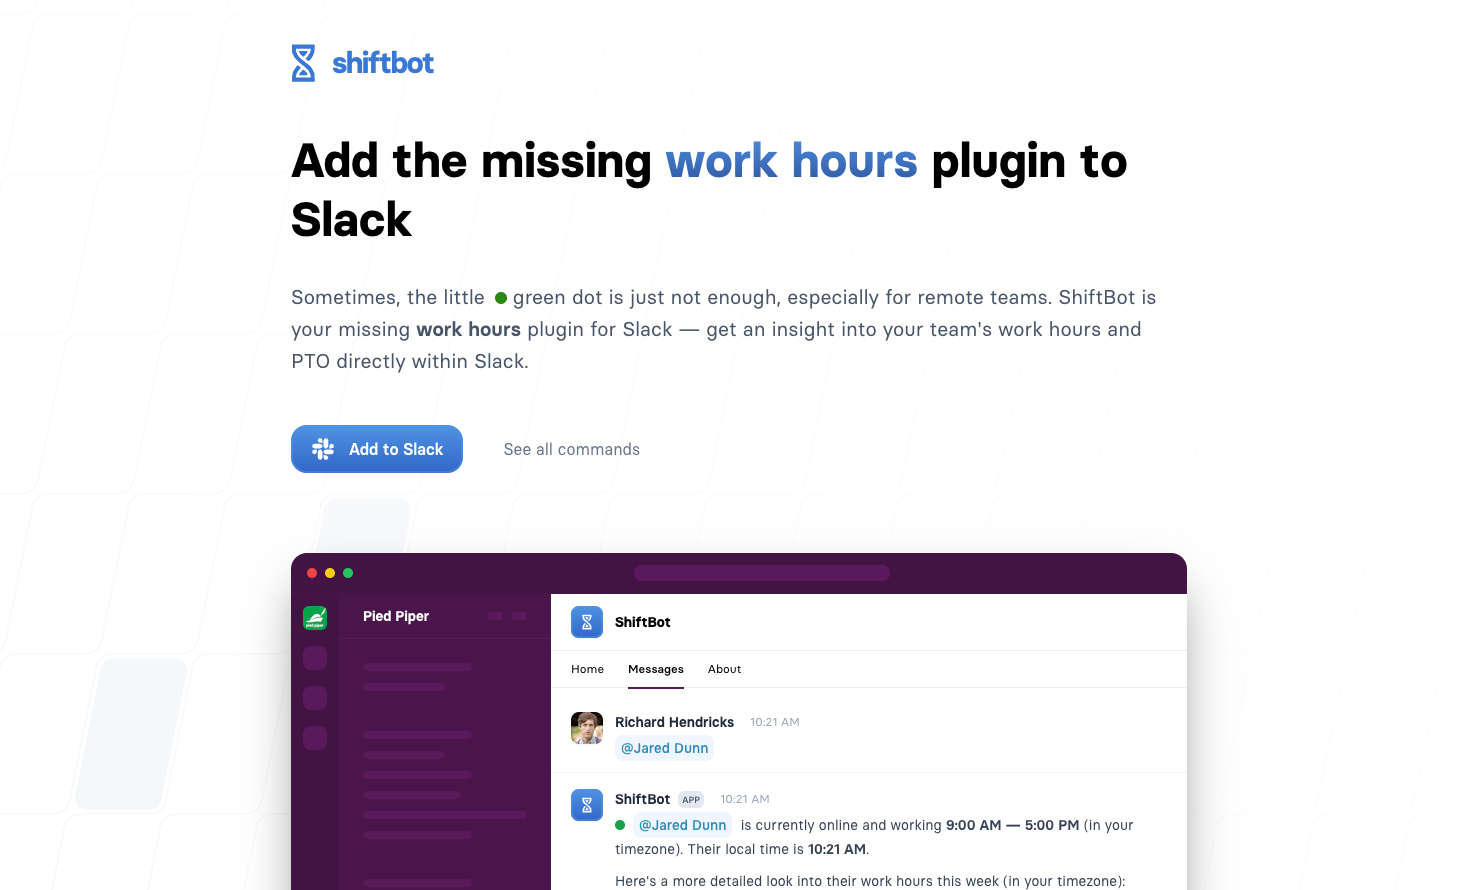 ShiftBot: The missing work hours plugin for Slack